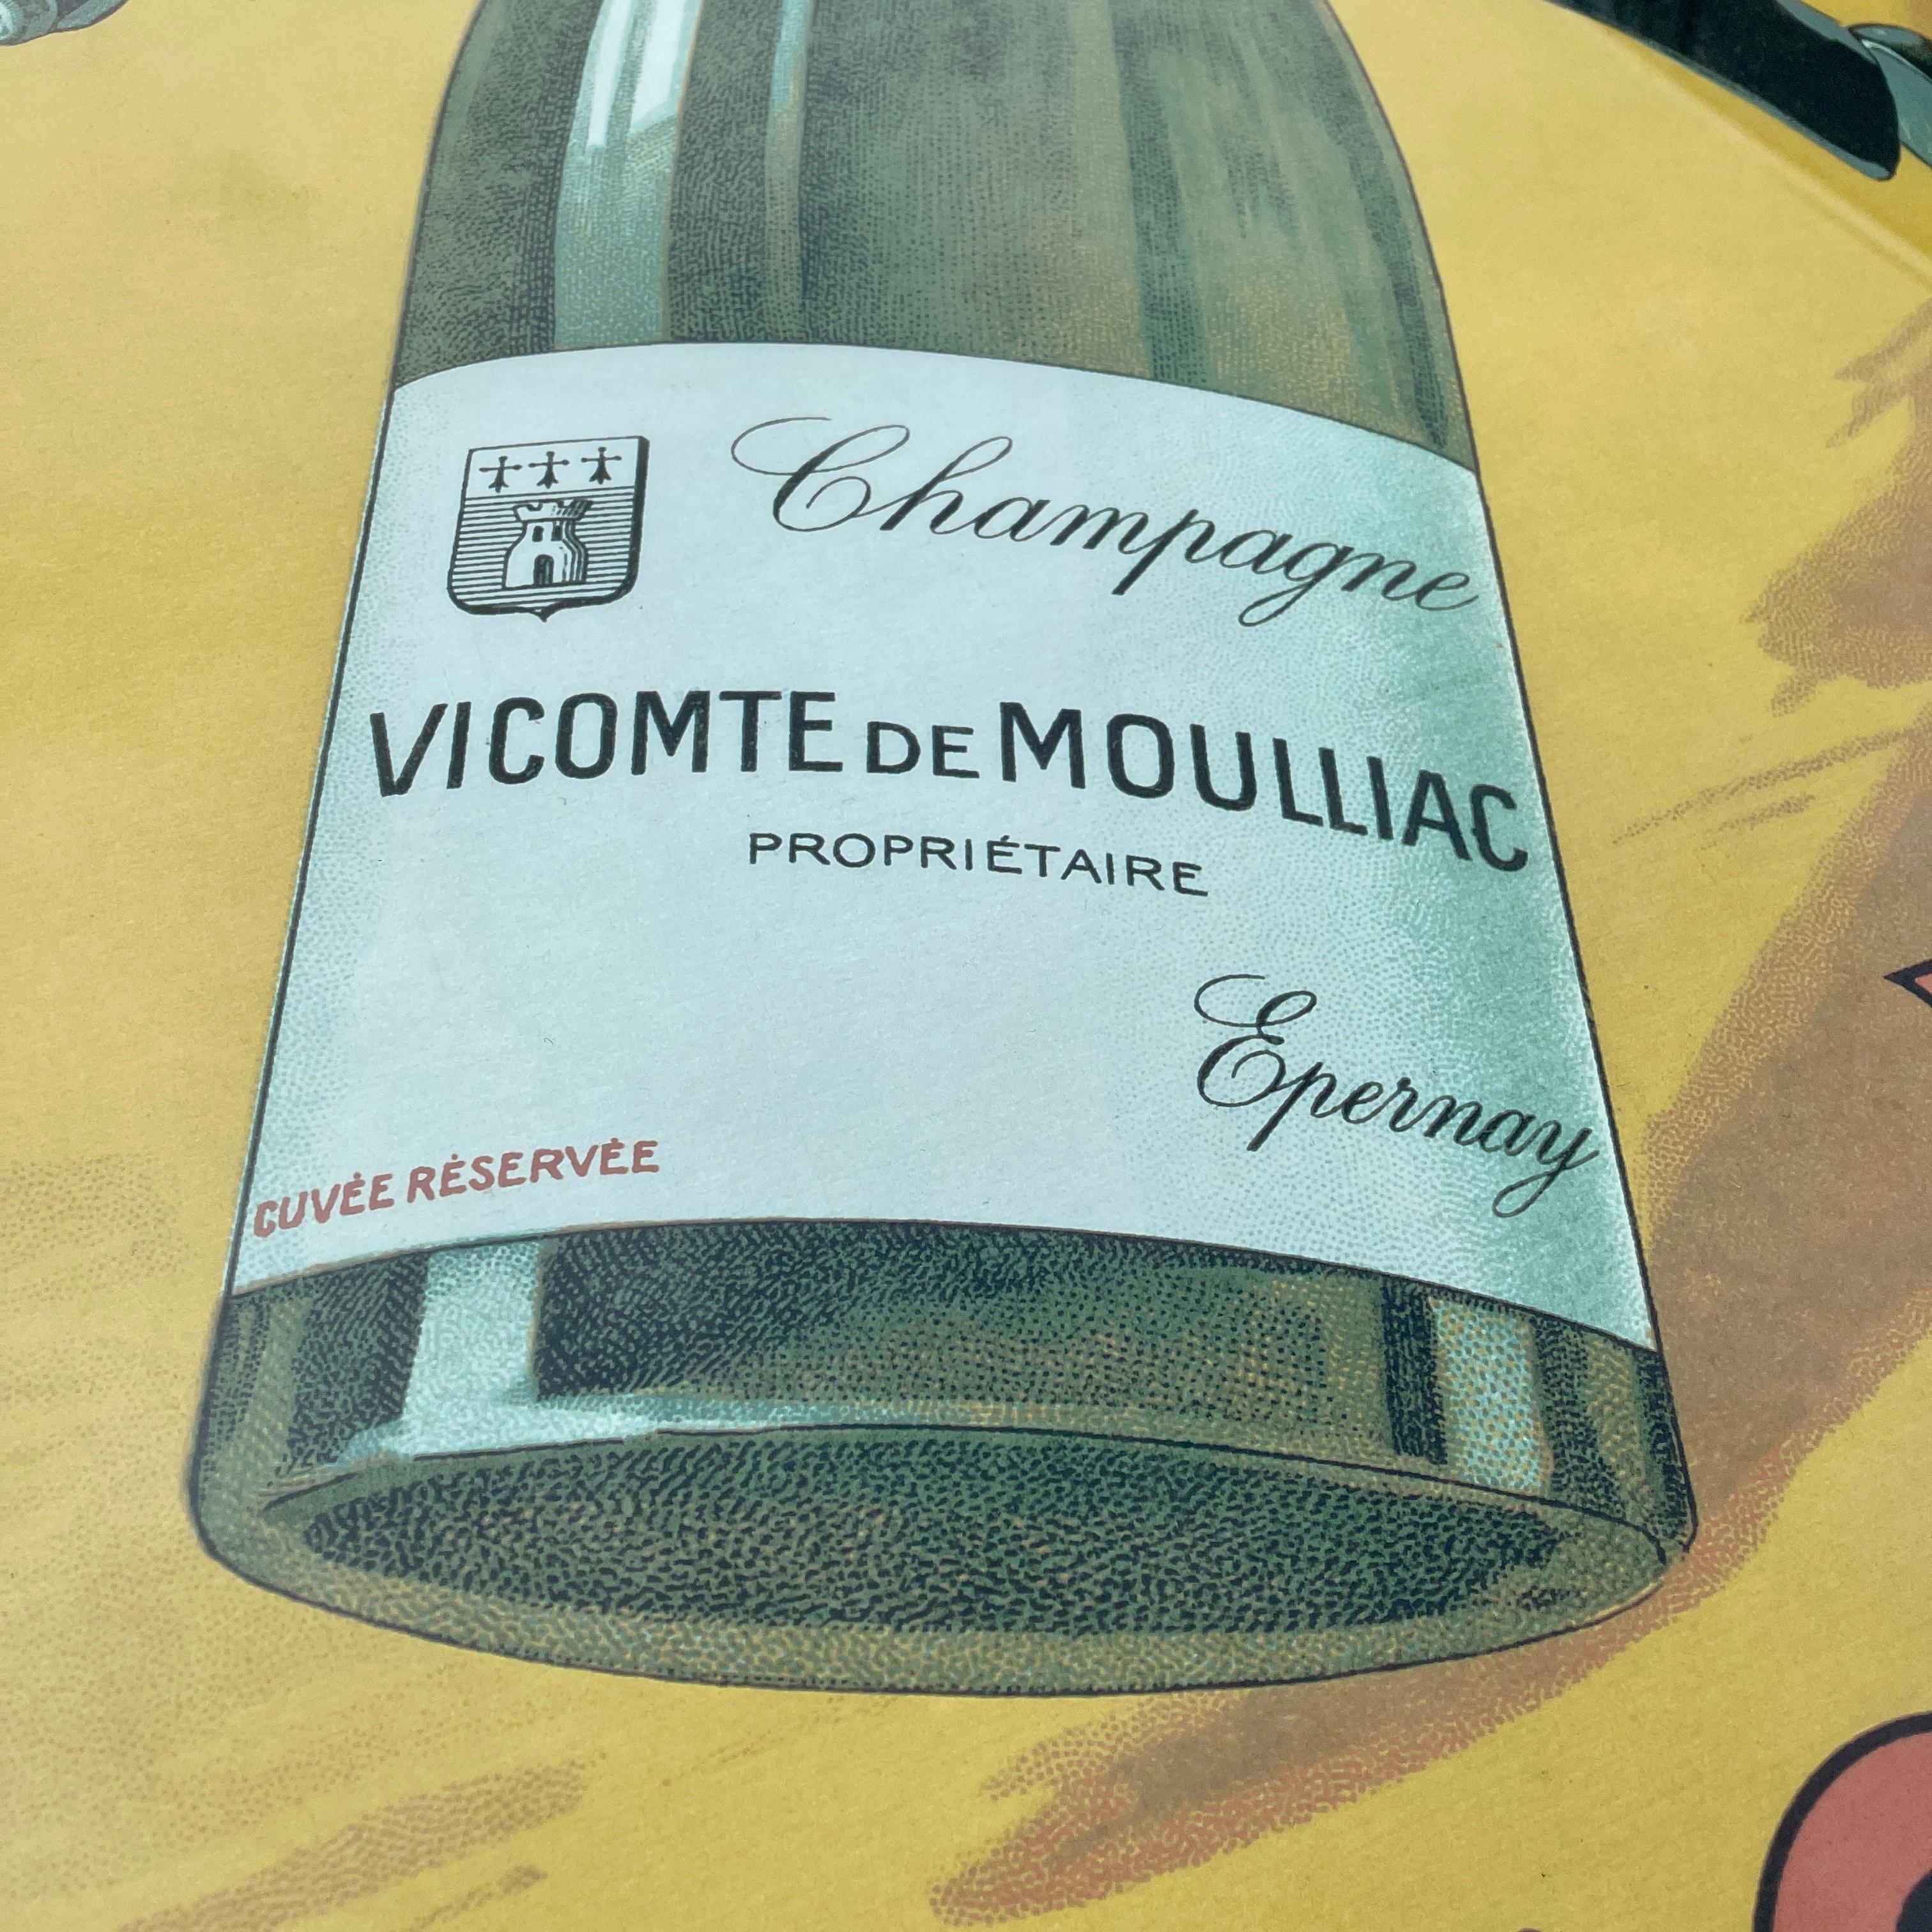 20th Century Large Framed Poster For Champagne Vicomte de Moulliac